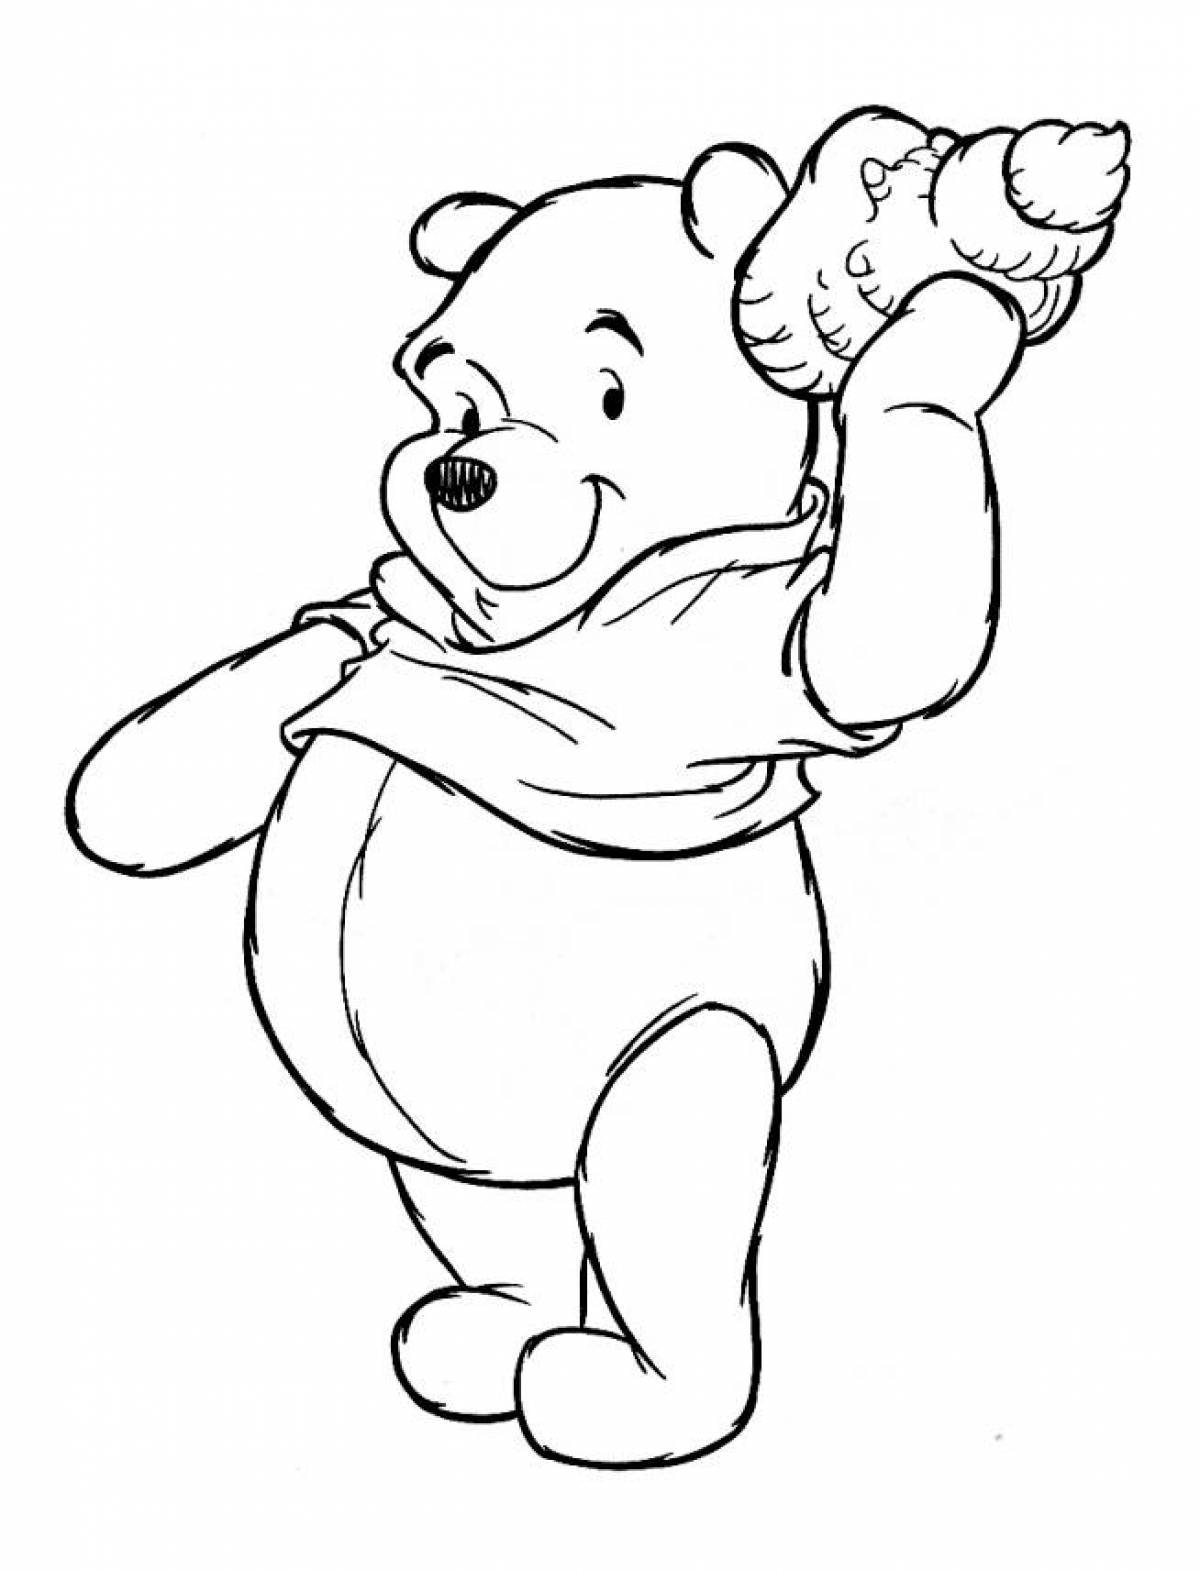 Winnie the pooh #1